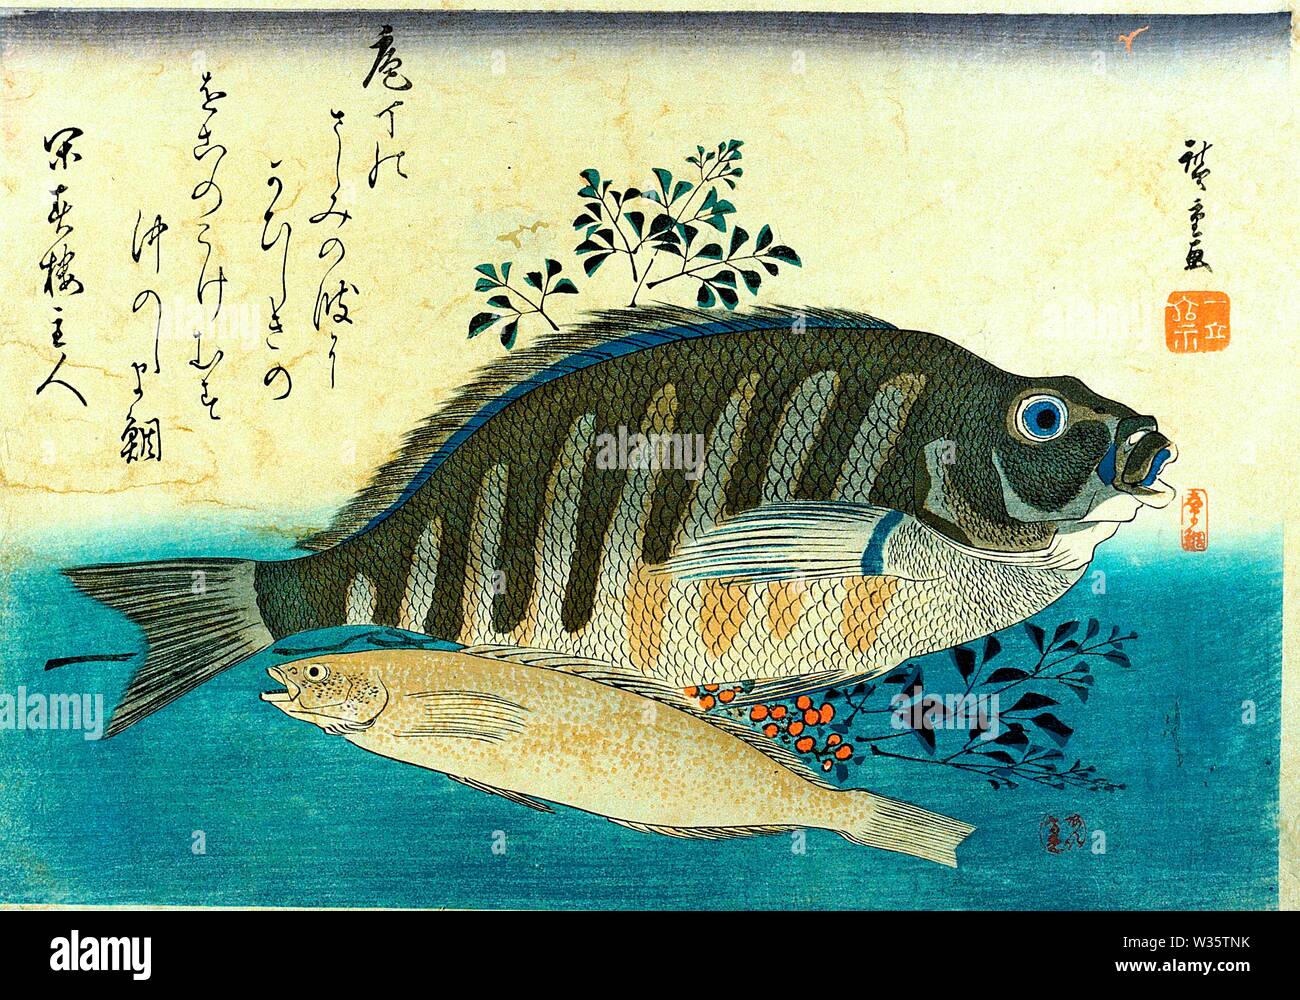 Ainame (Greenling), Shima-hata (Grouper) with bush clover or nandin Utagawa Hiroshige woodblock print from series Uozukushi (Every Variety of Fish) Stock Photo